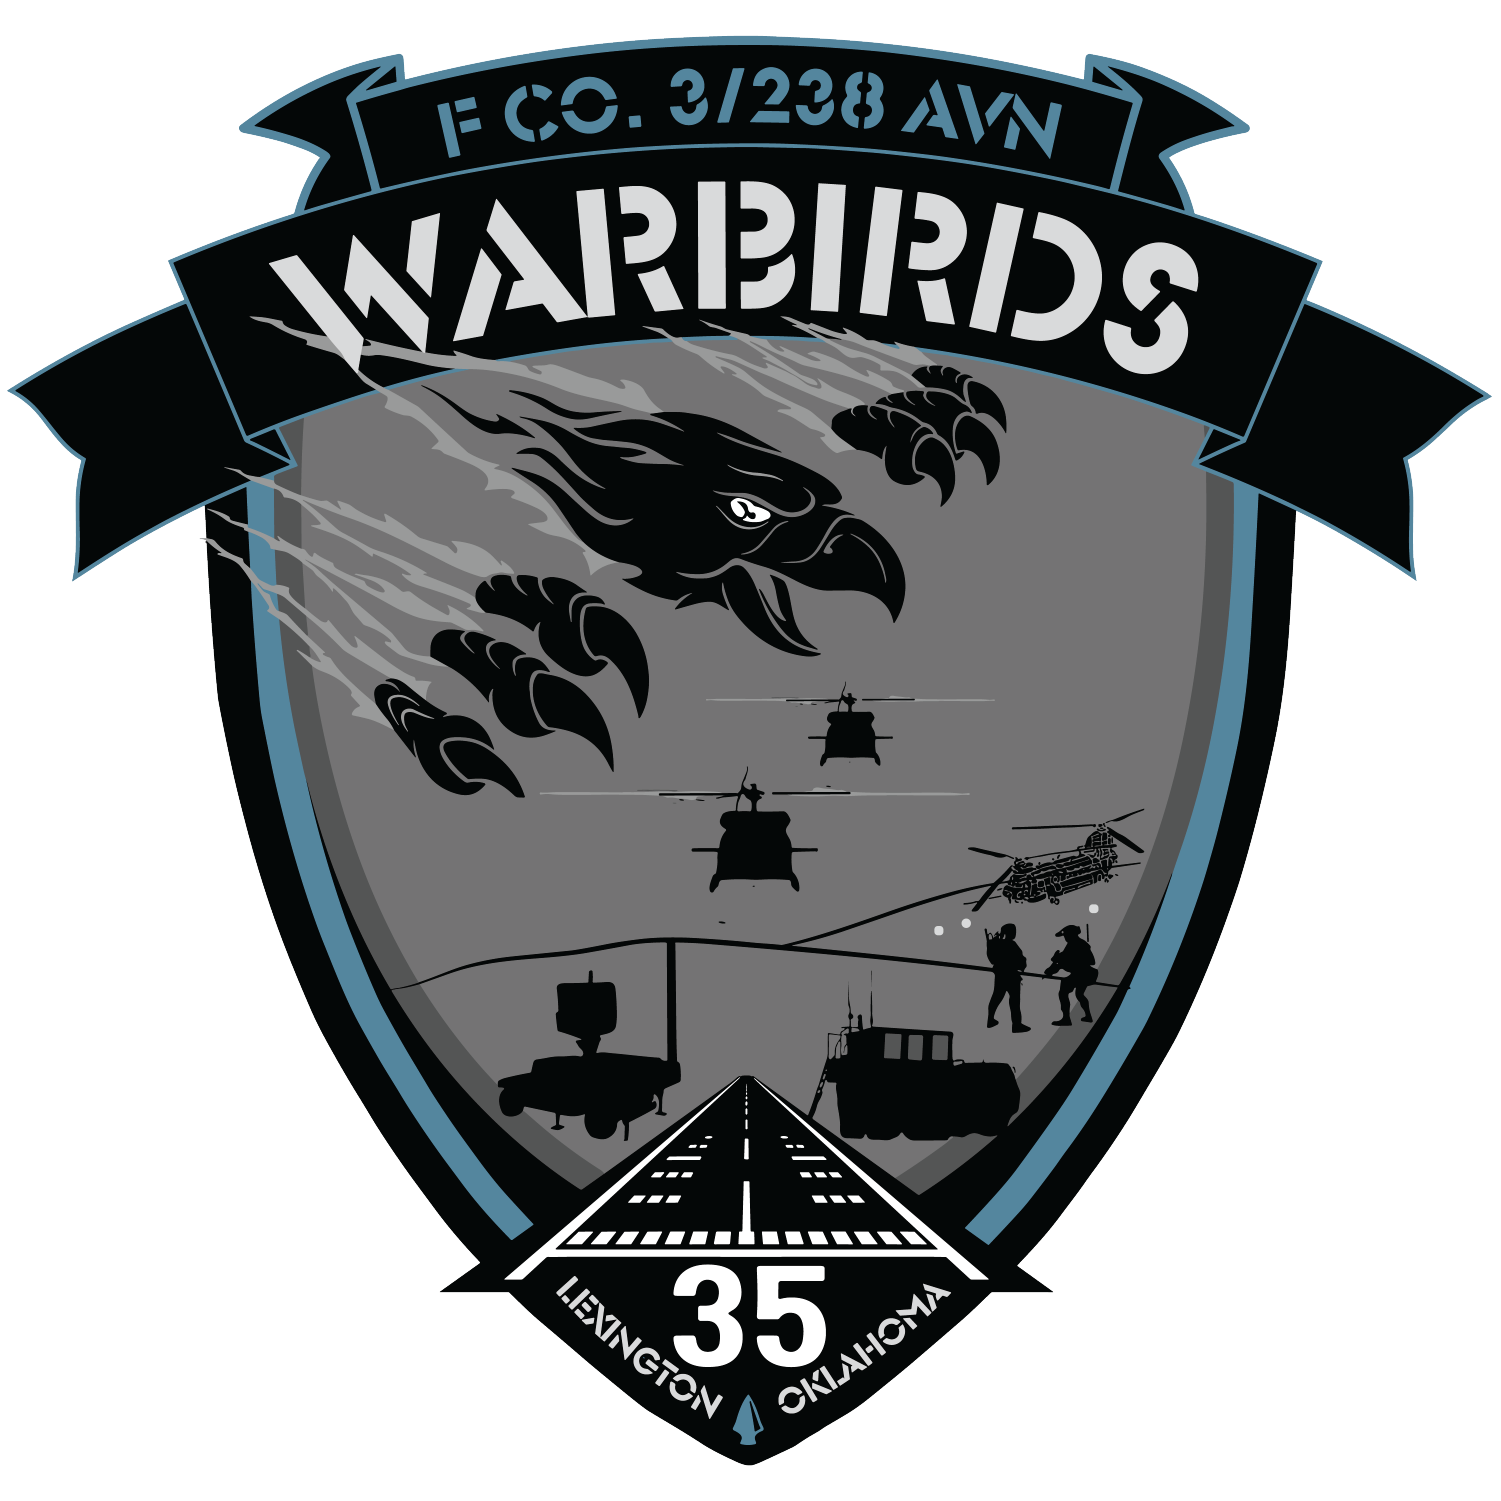 F Co, 3-238 ATC "Warbirds"